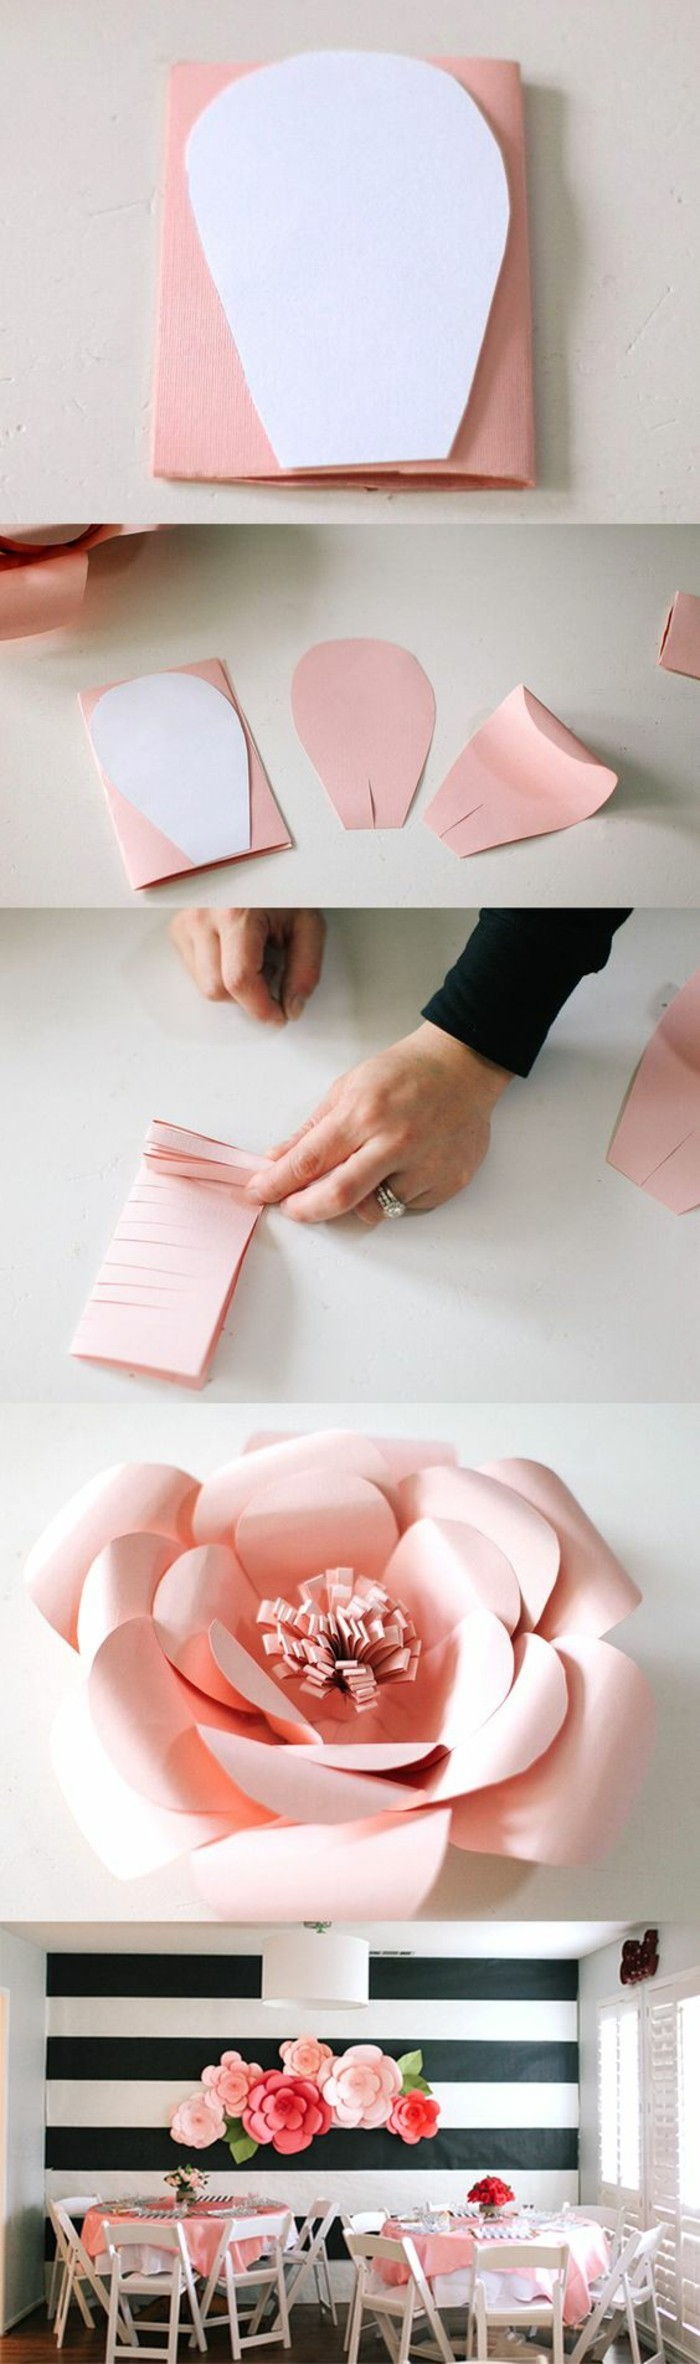 2-Wanddeko-selv-making fruhlingdeko-bastaln-Rosan-tinker-laget papier-